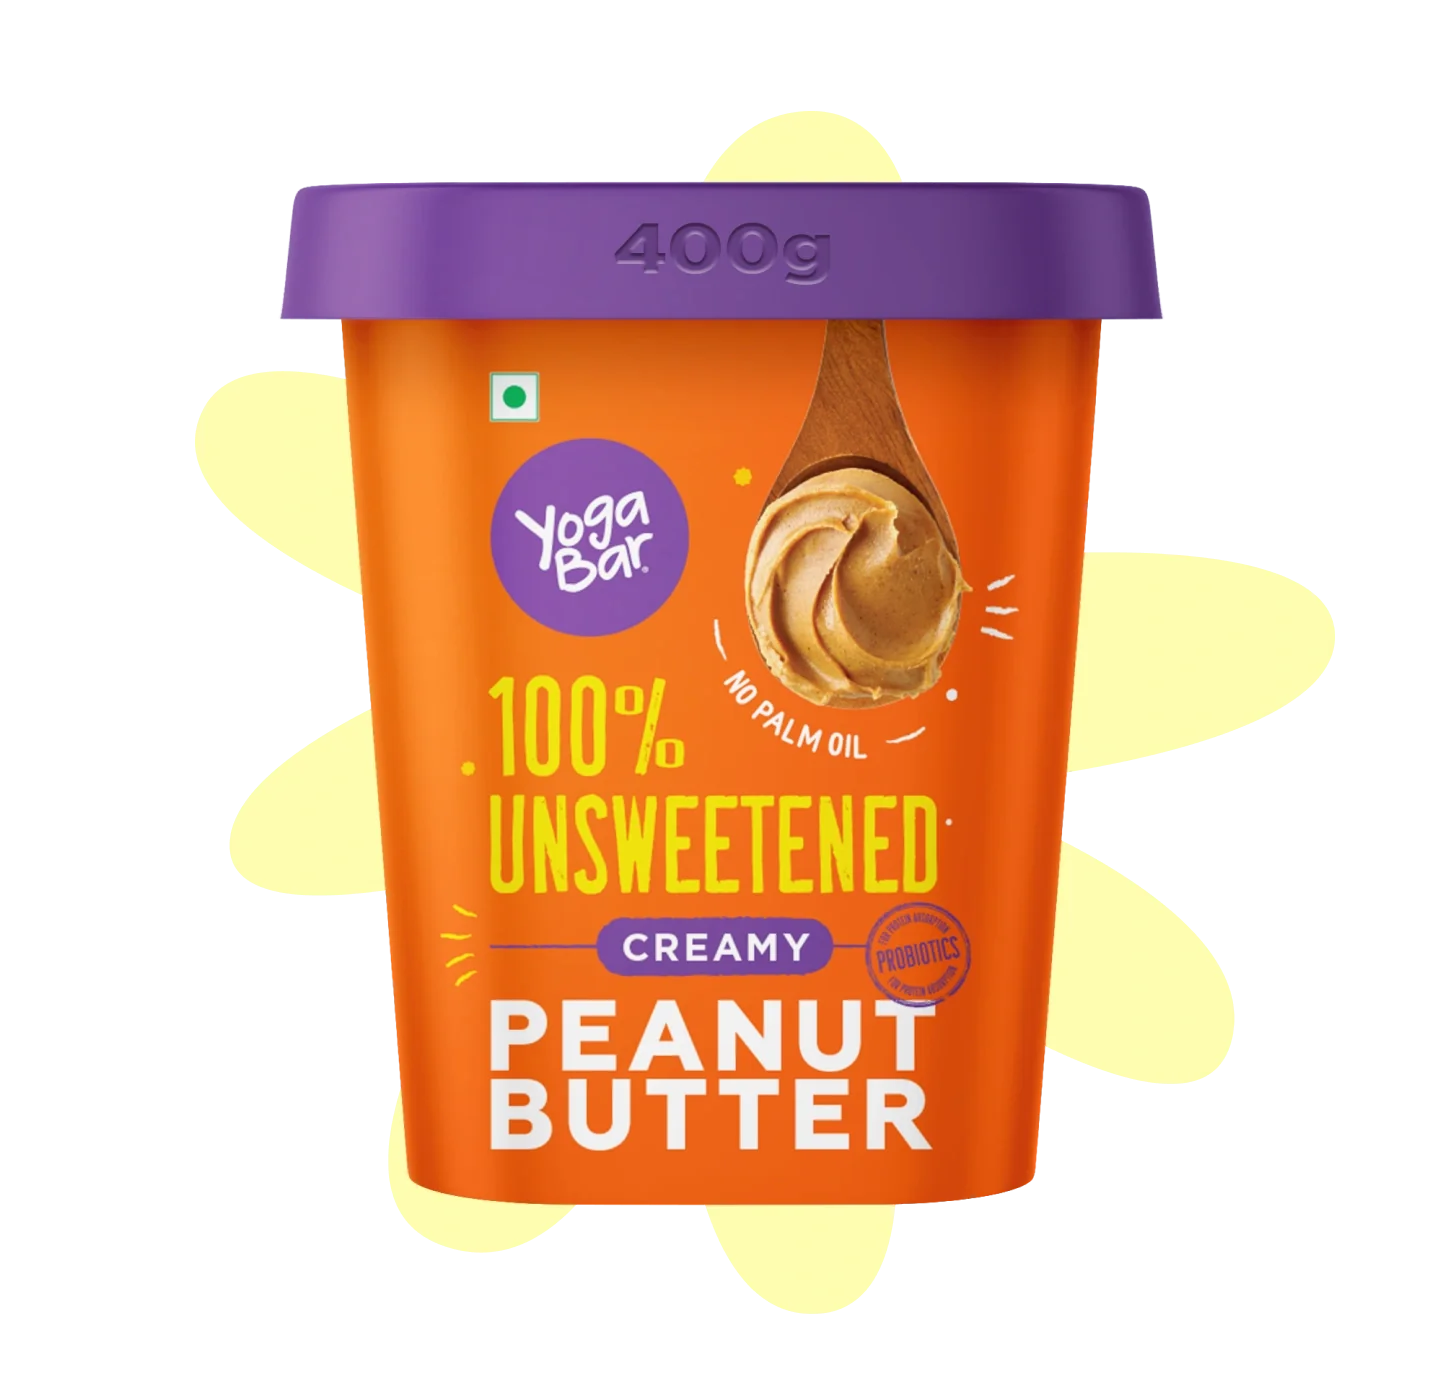 yogabar unsweetened peanut butter